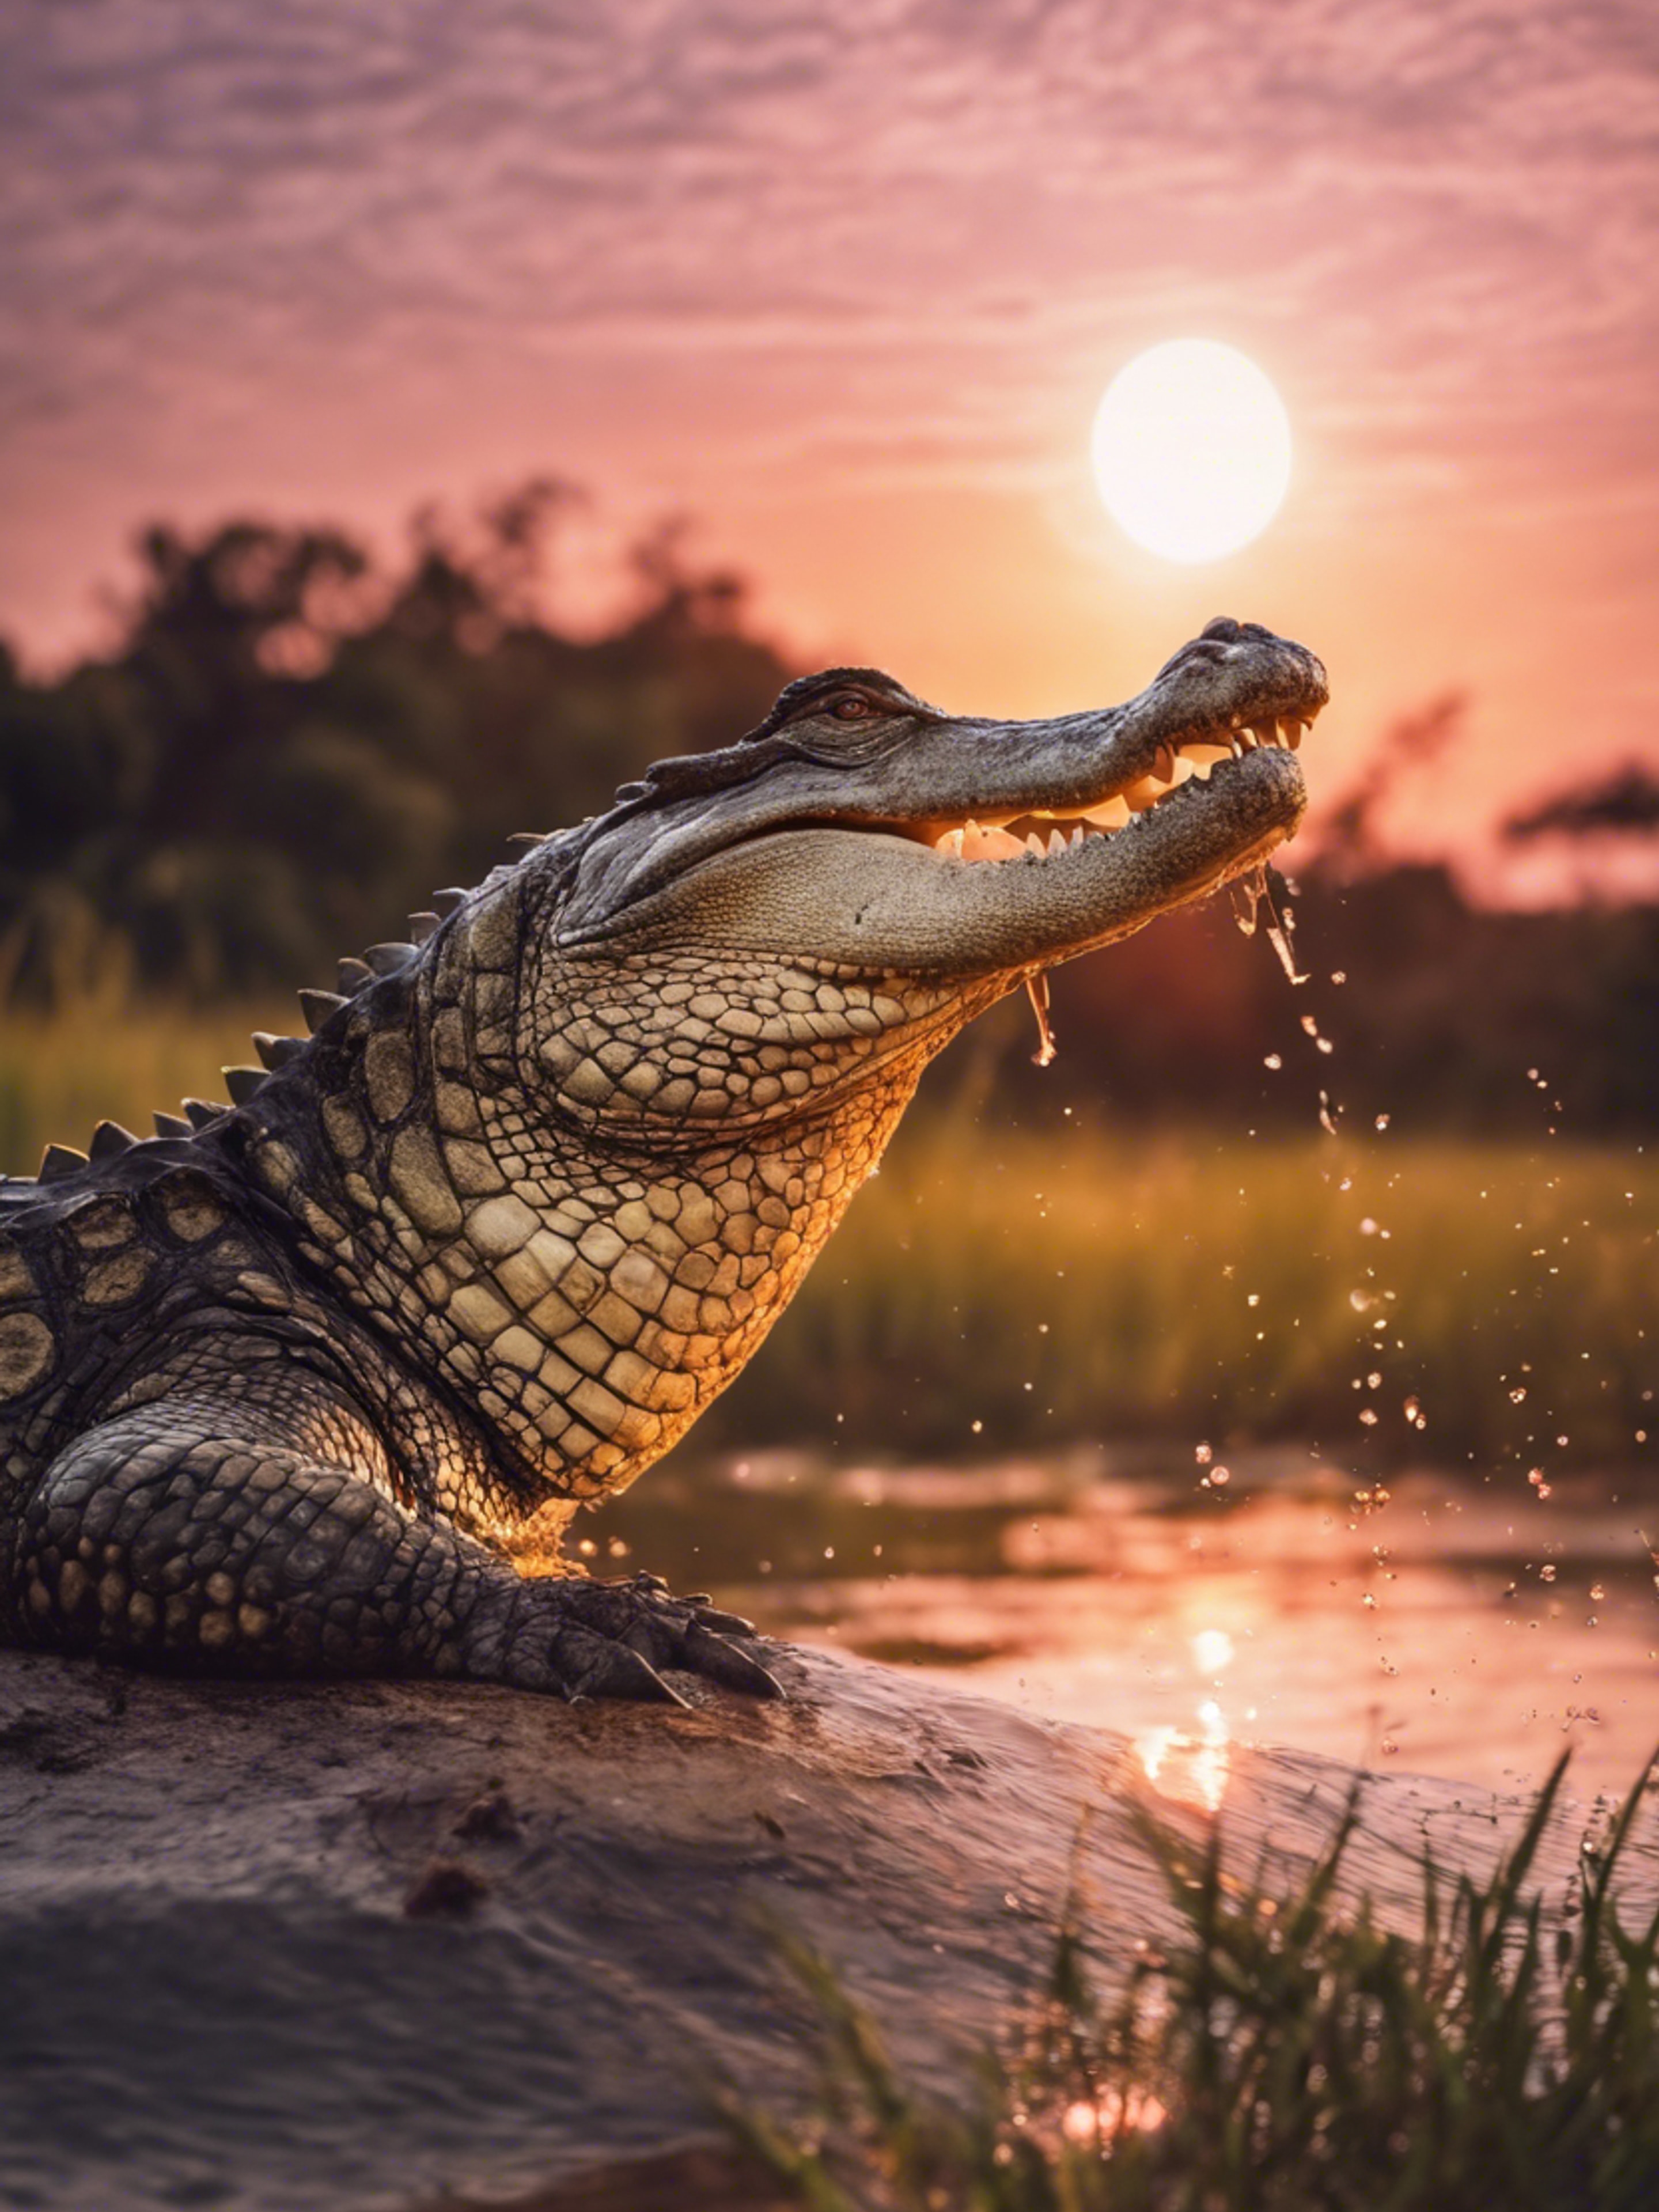 A beautiful sunrise with a crocodile breaking the surface under a rosy sky. Fondo de pantalla[8e947b6adb0246b9980f]